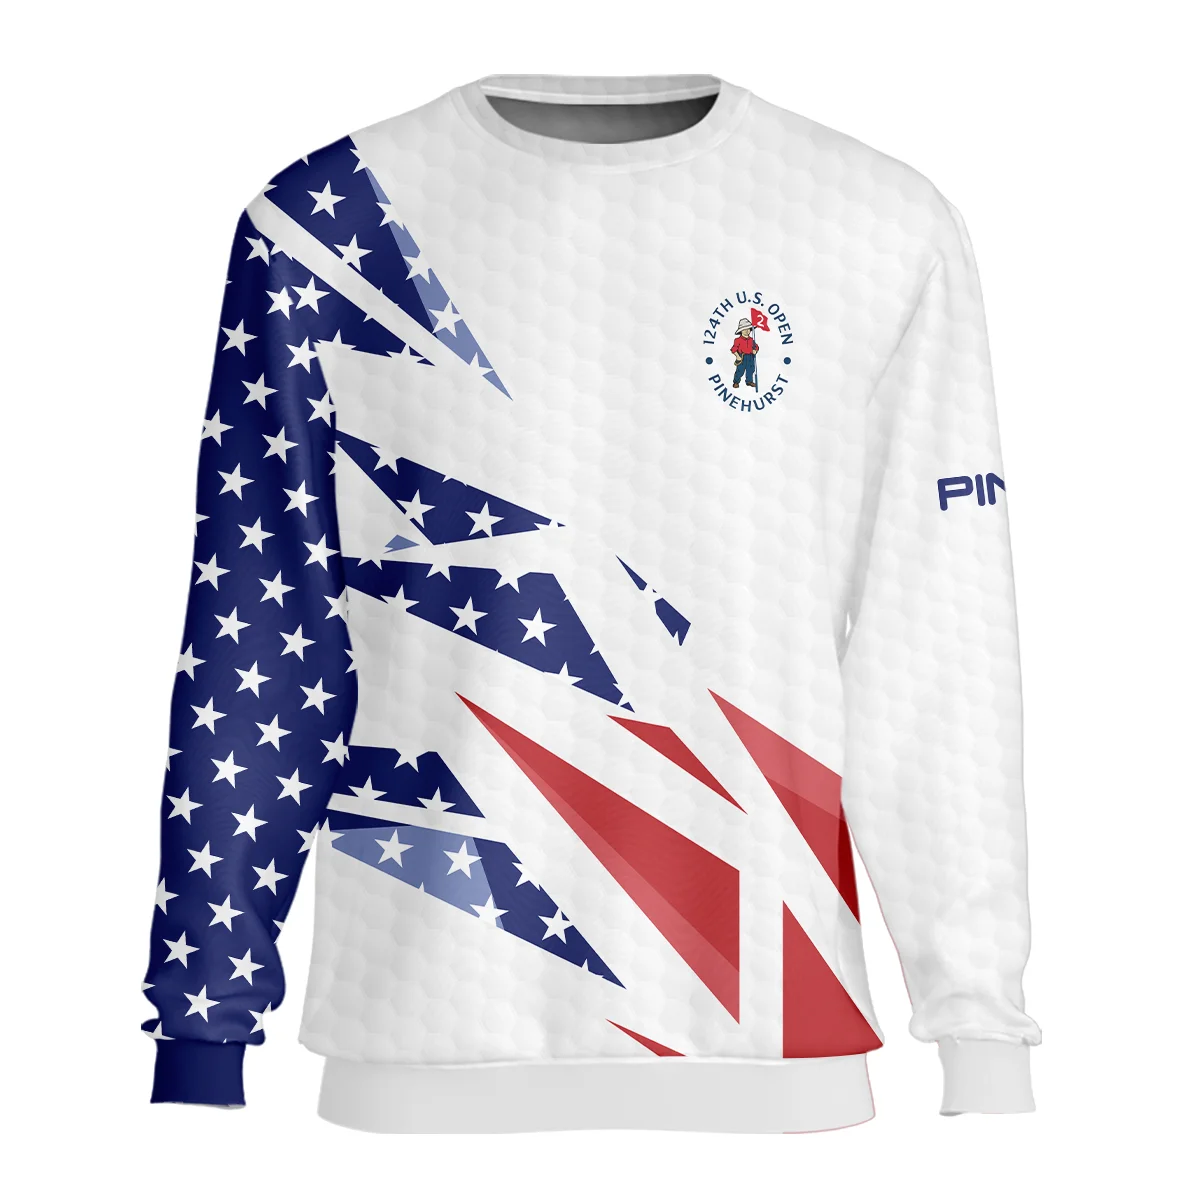 124th U.S. Open Pinehurst Ping Hawaiian Shirt Golf Pattern White USA Flag All Over Print Oversized Hawaiian Shirt